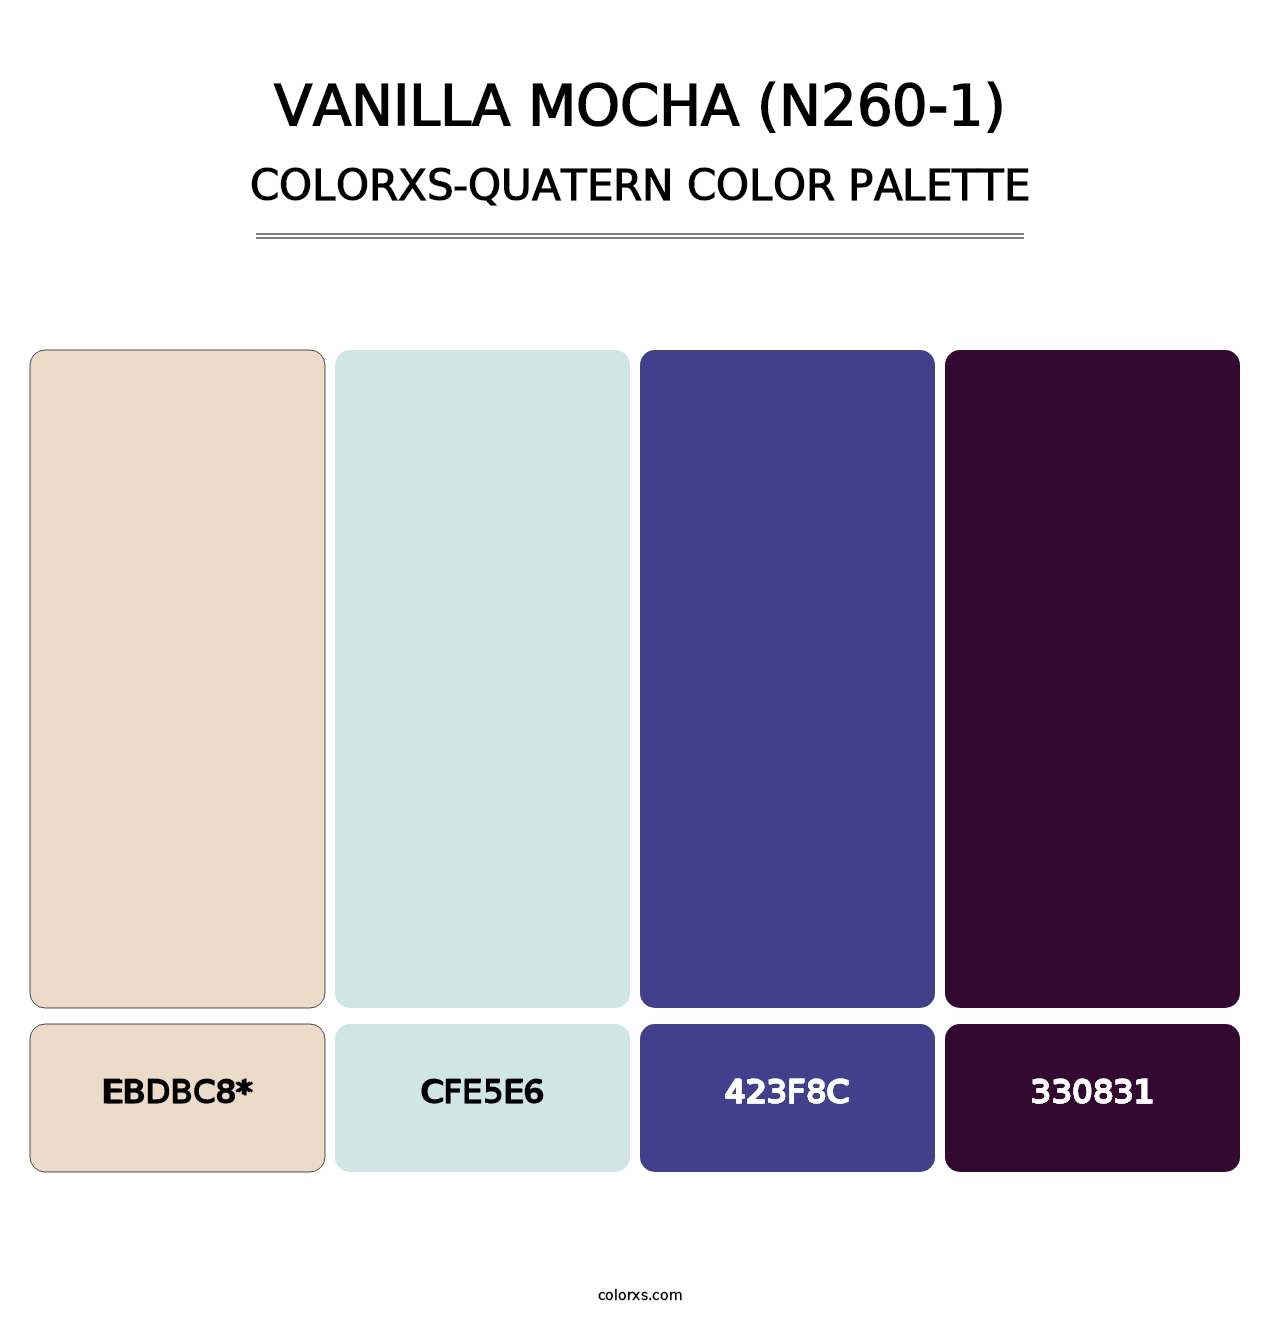 Vanilla Mocha (N260-1) - Colorxs Quatern Palette